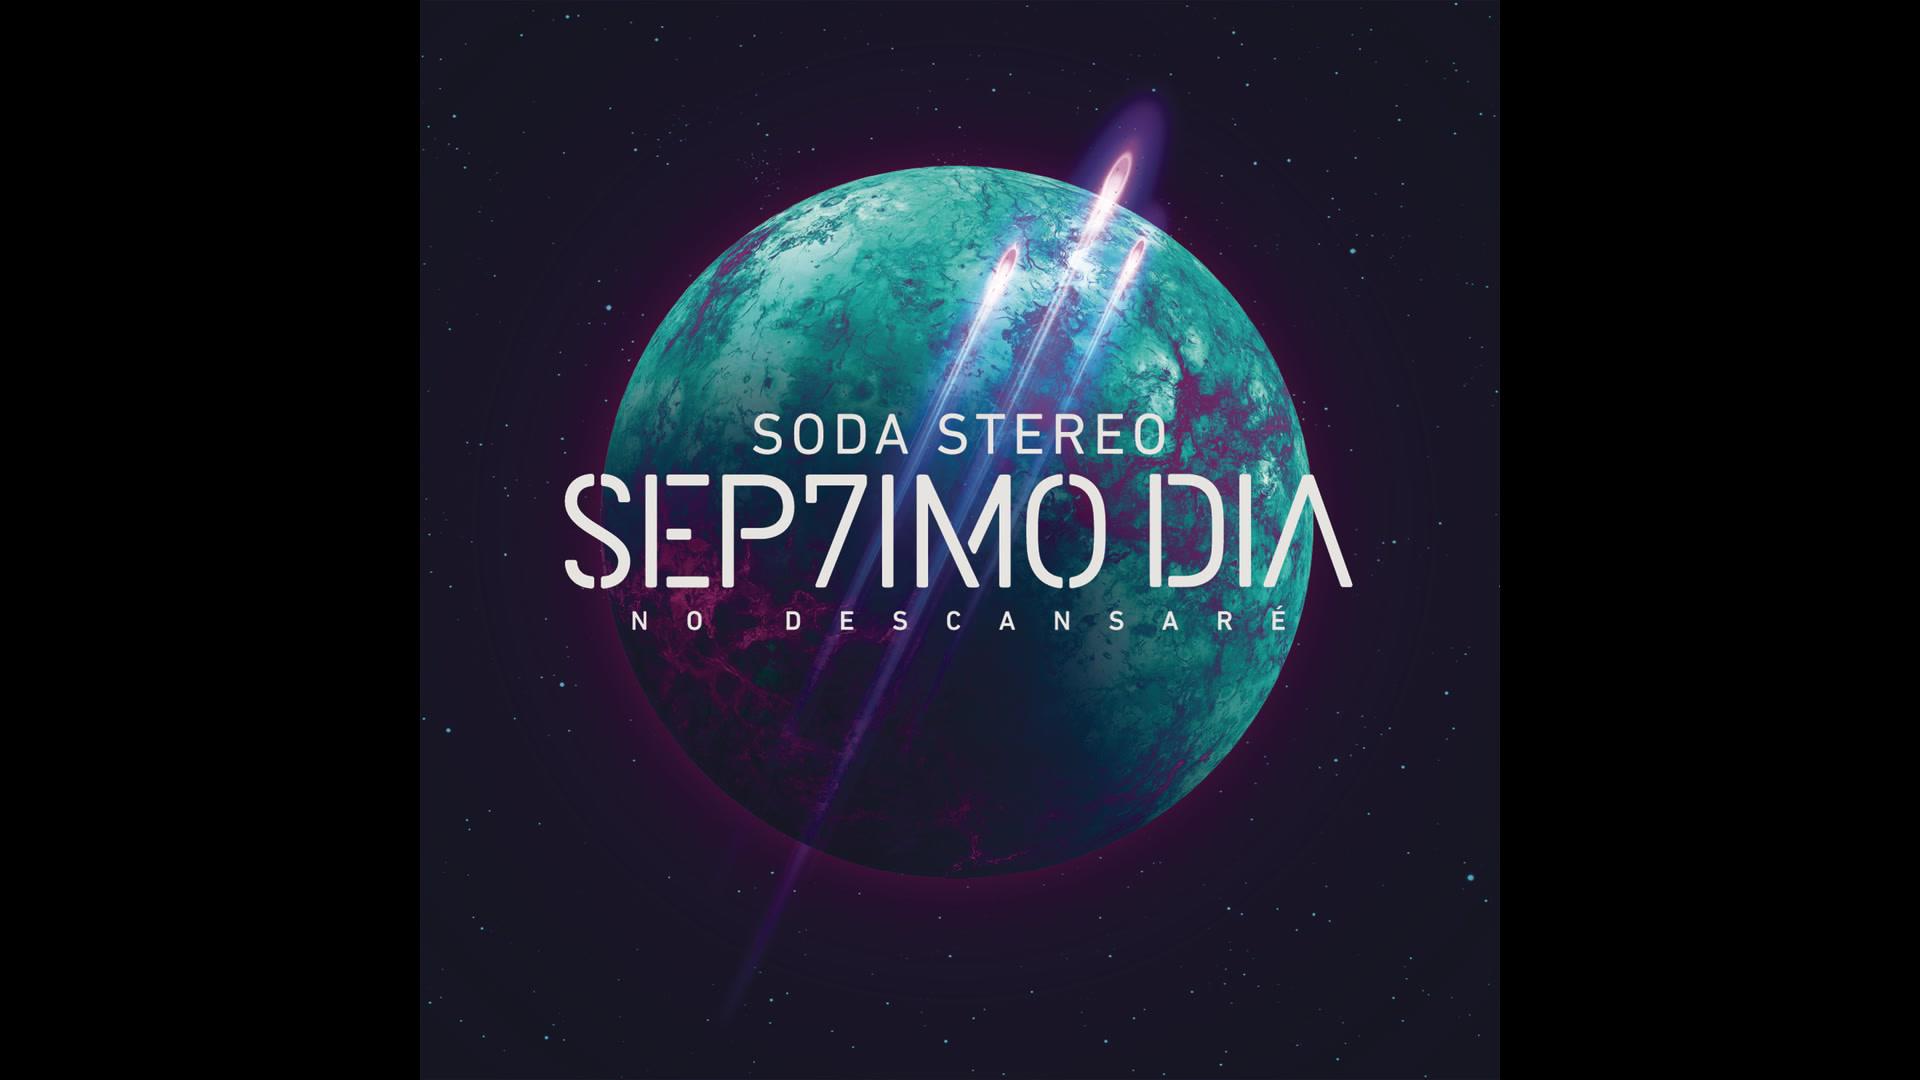 Soda Stereo - Sueles Dejarme Solo (SEP7IMO DIA) (Official Audio)